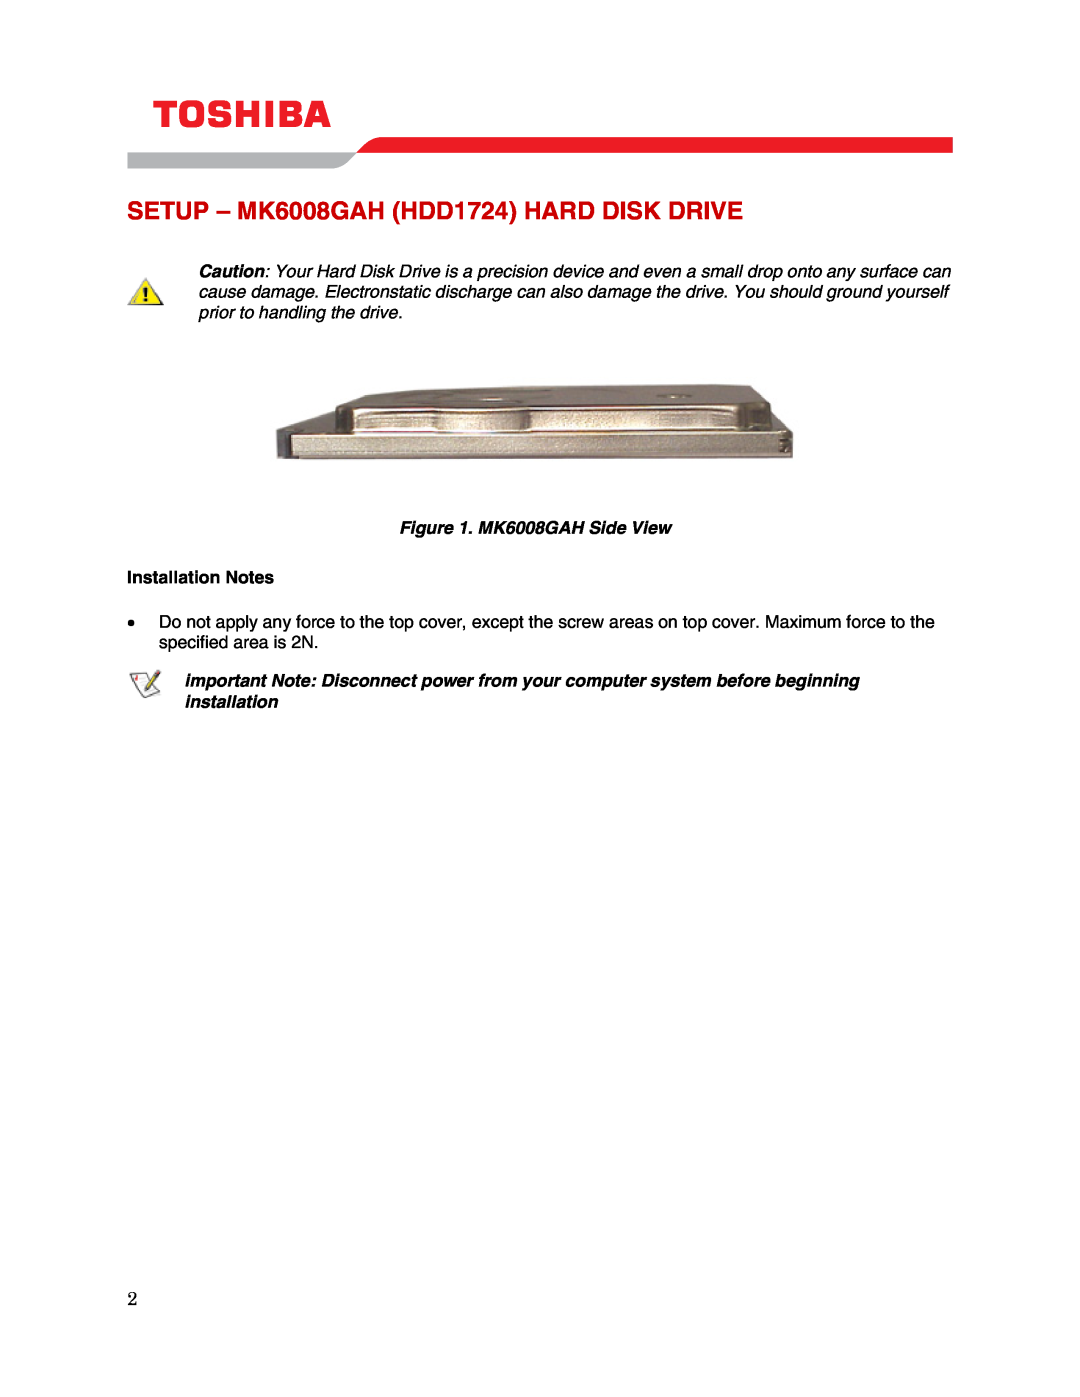 Toshiba user manual SETUP - MK6008GAH HDD1724 HARD DISK DRIVE, MK6008GAH Side View, Installation Notes 